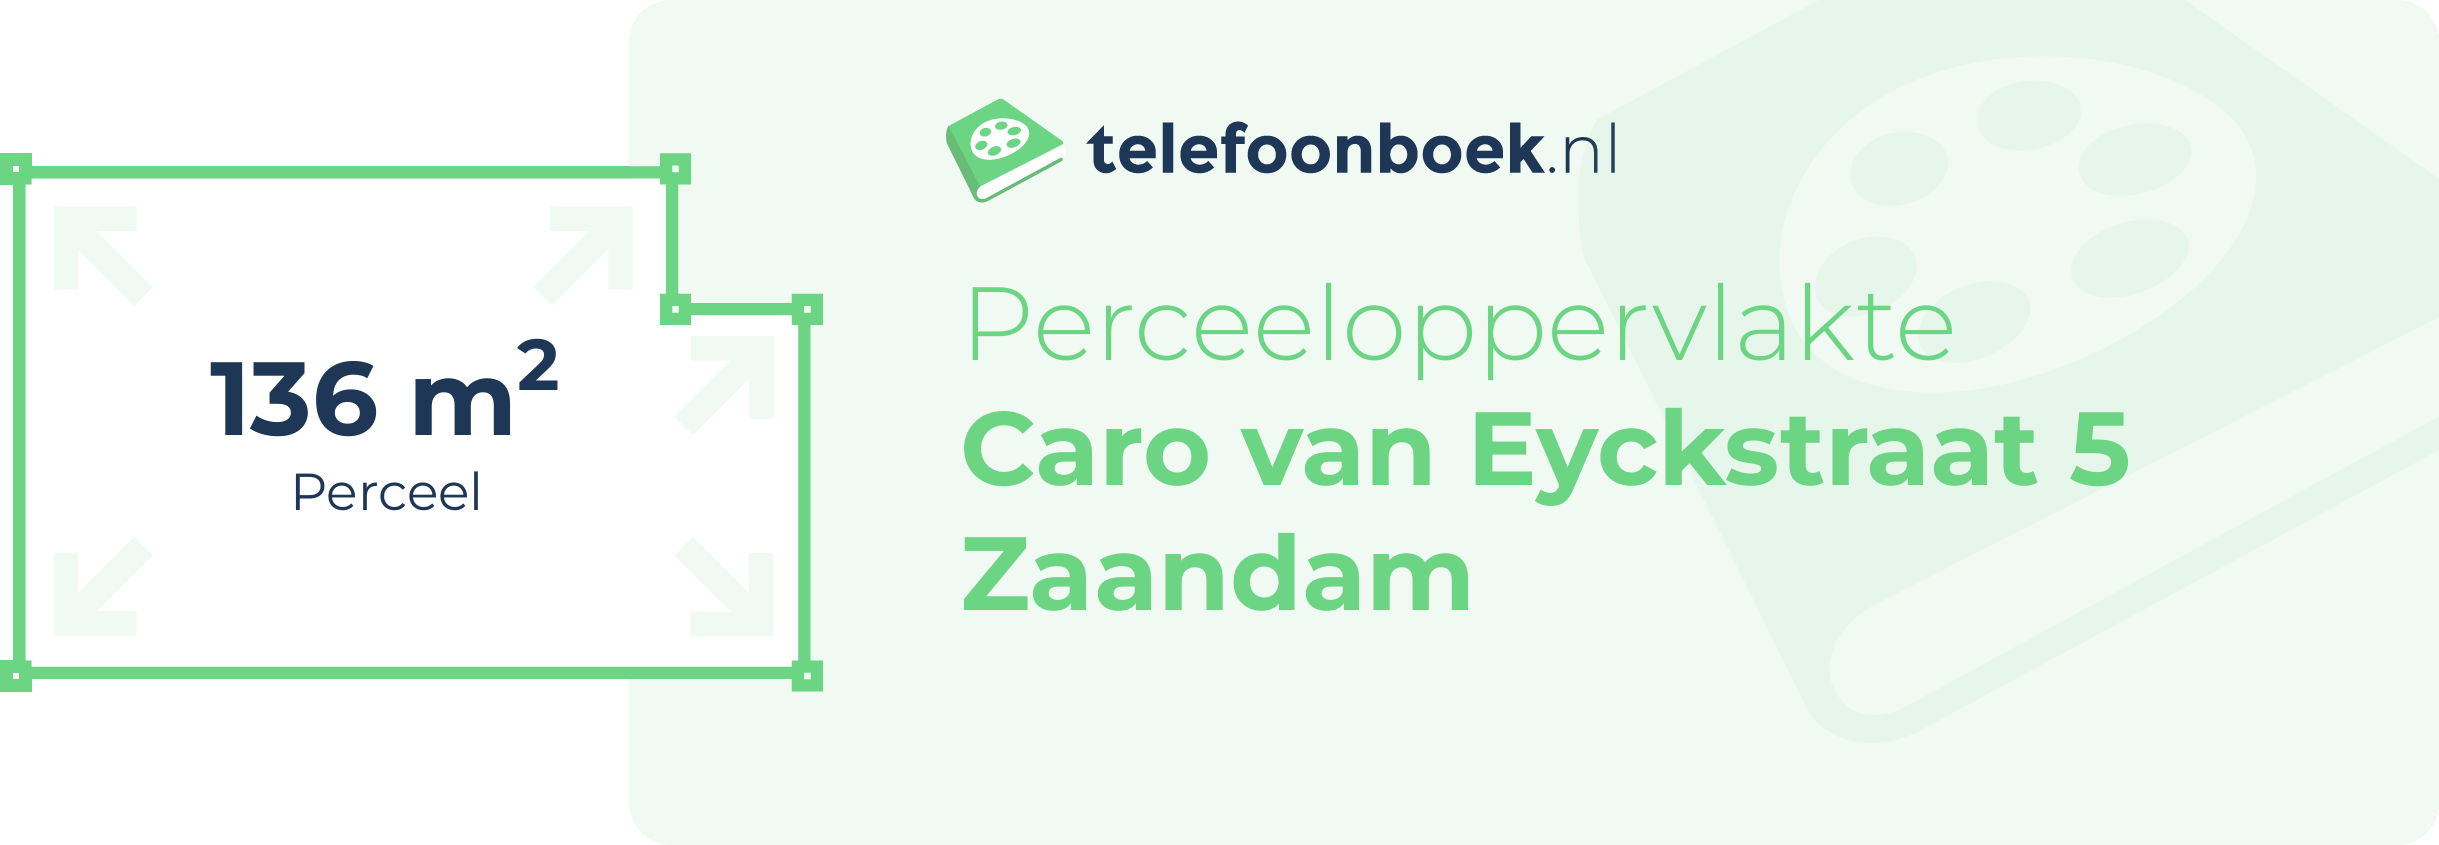 Perceeloppervlakte Caro Van Eyckstraat 5 Zaandam